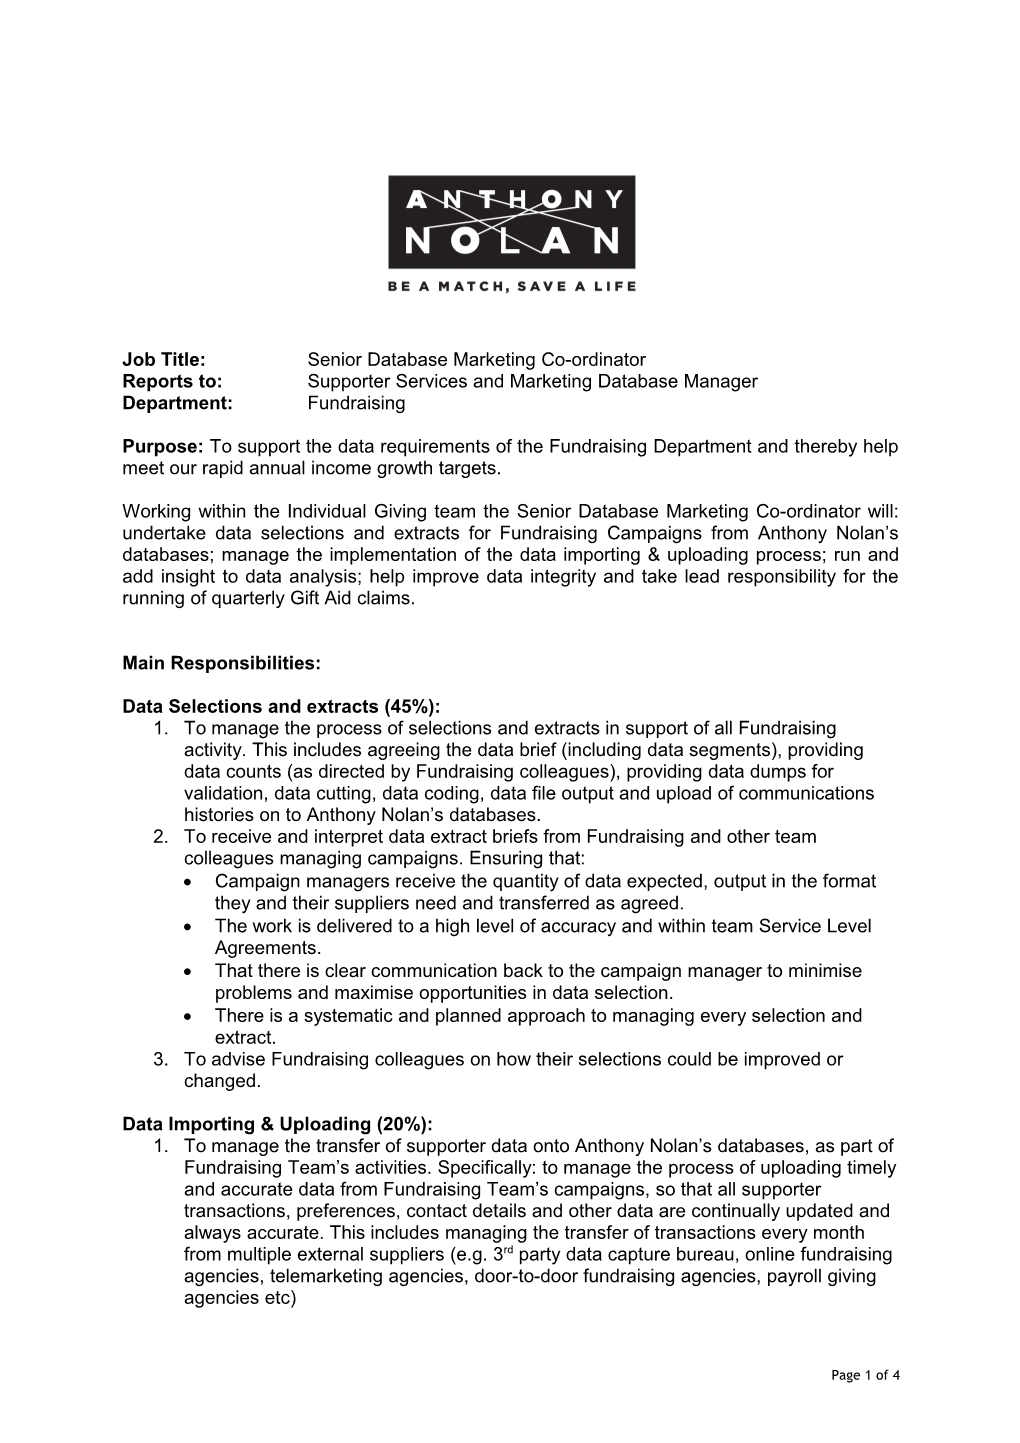 Job Description: Senior Database Marketing Co-Ordinator, Fundraising, Anthony Nolan